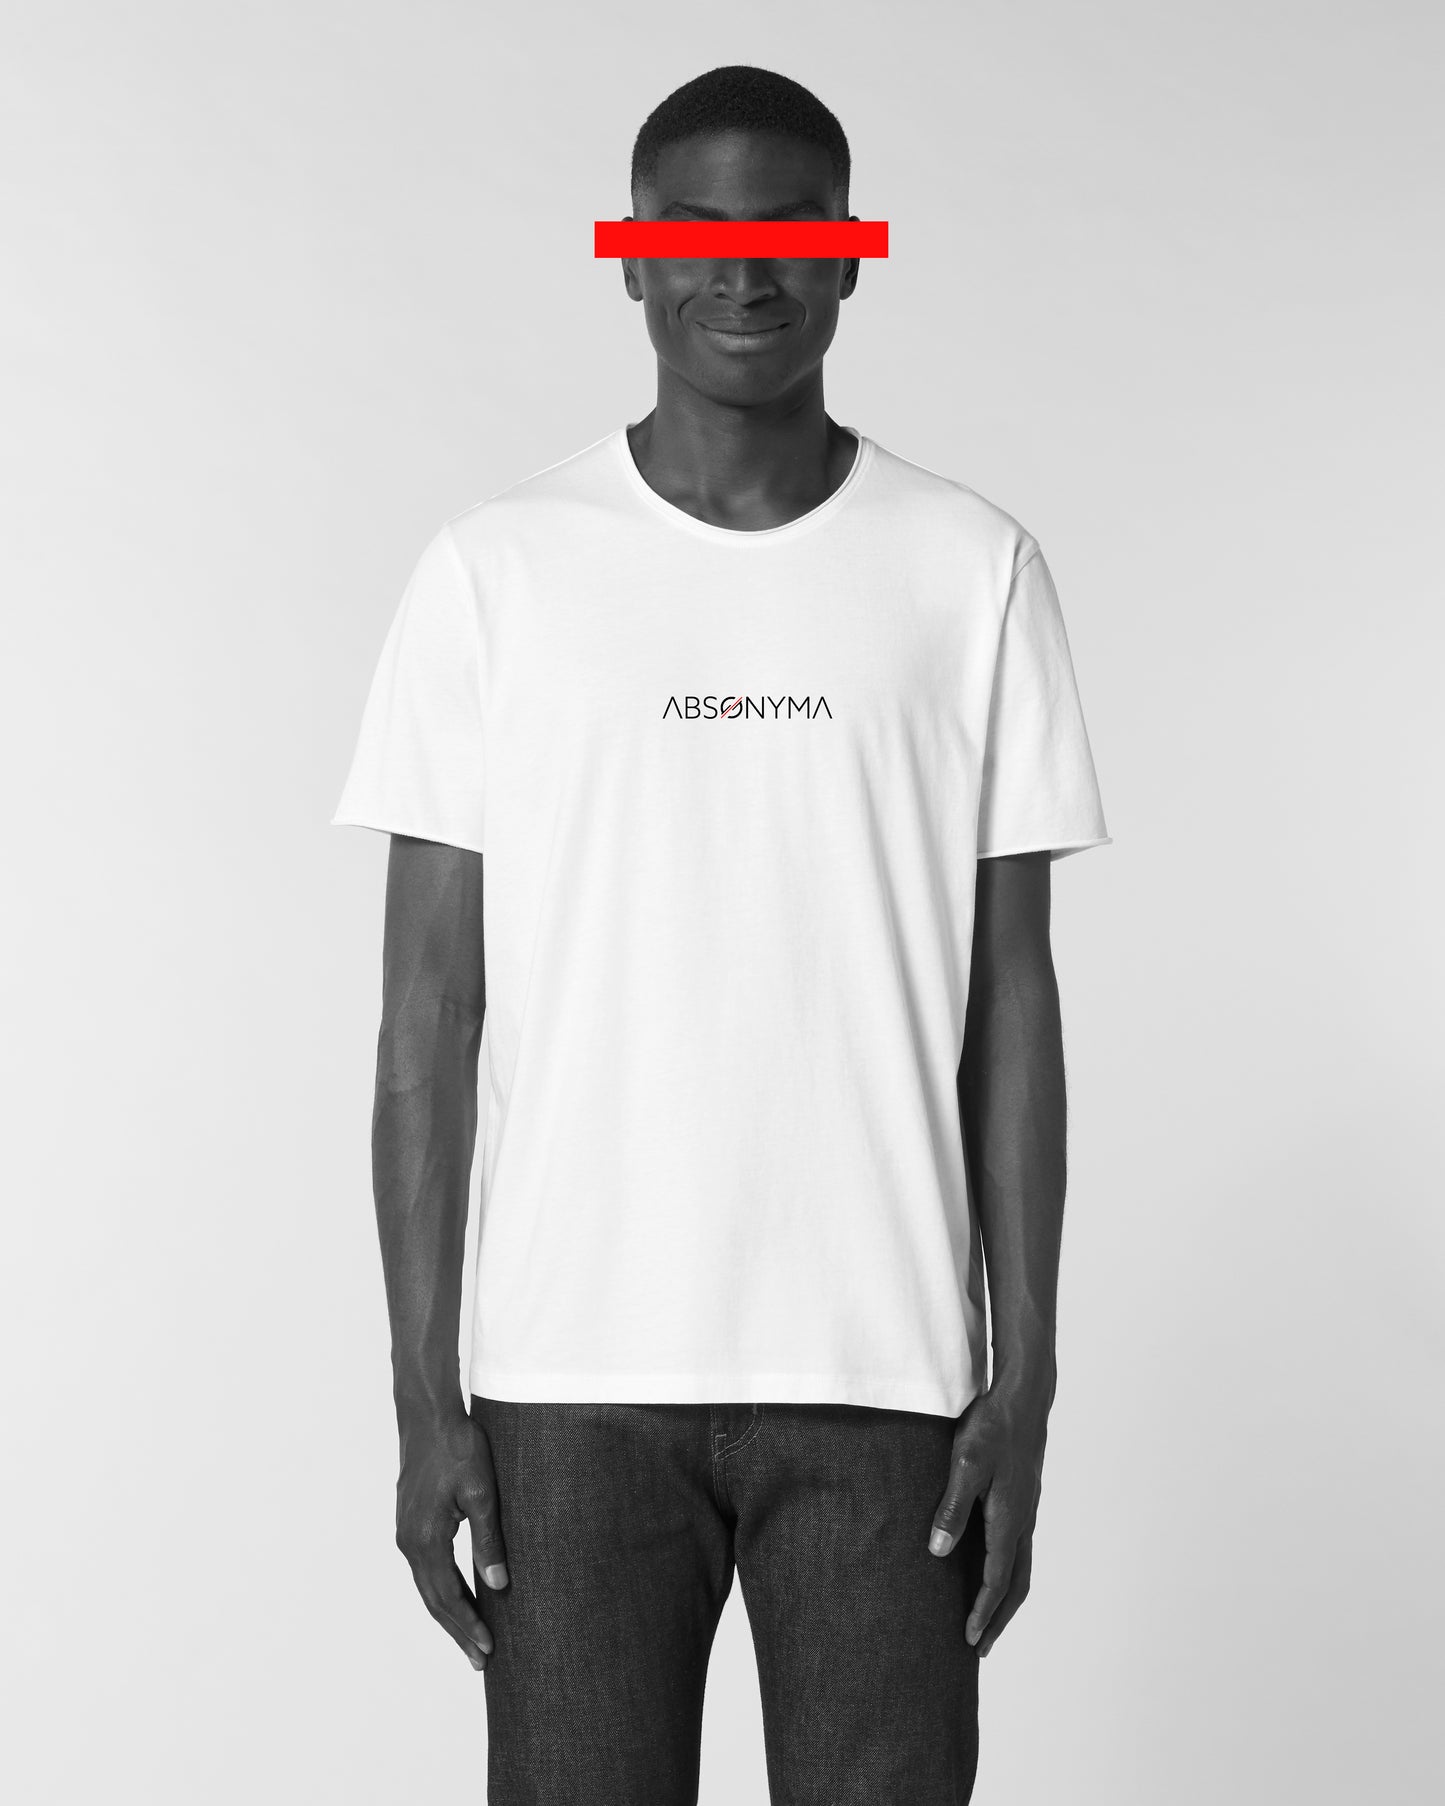 "Absonyma Name" - Raw Edges Unisex T-shirt